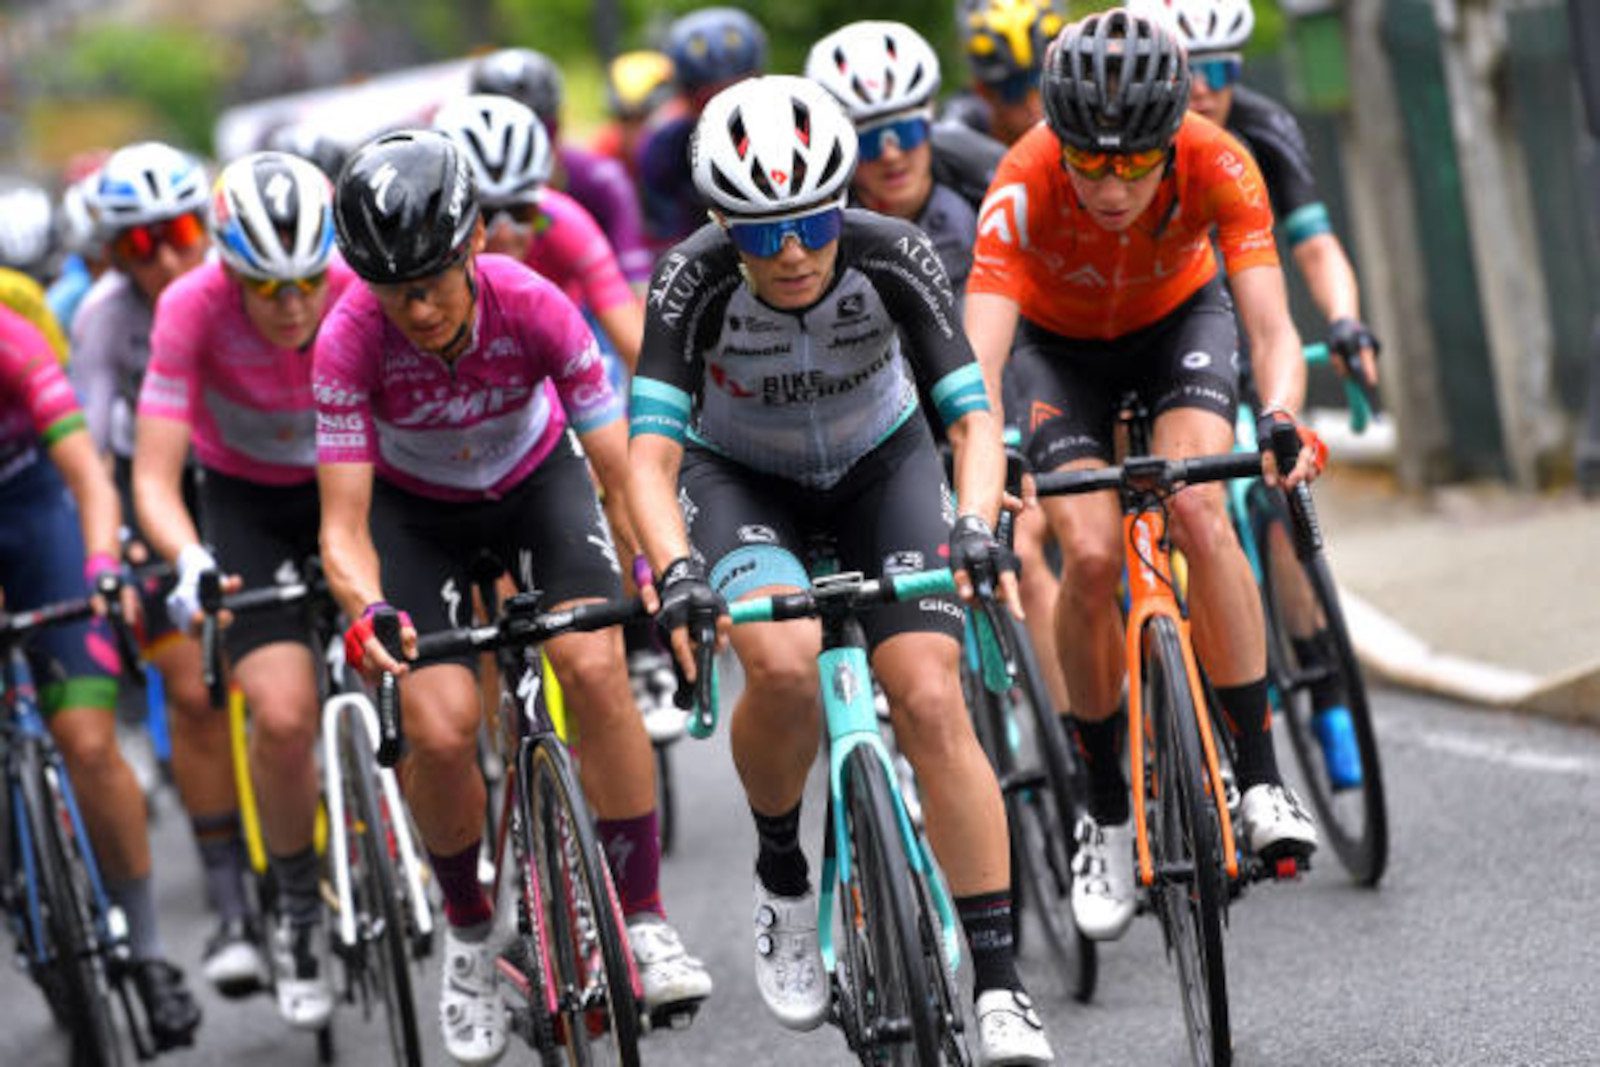 Giro d’Italia Donne route announced, €250,000 total prize money ...